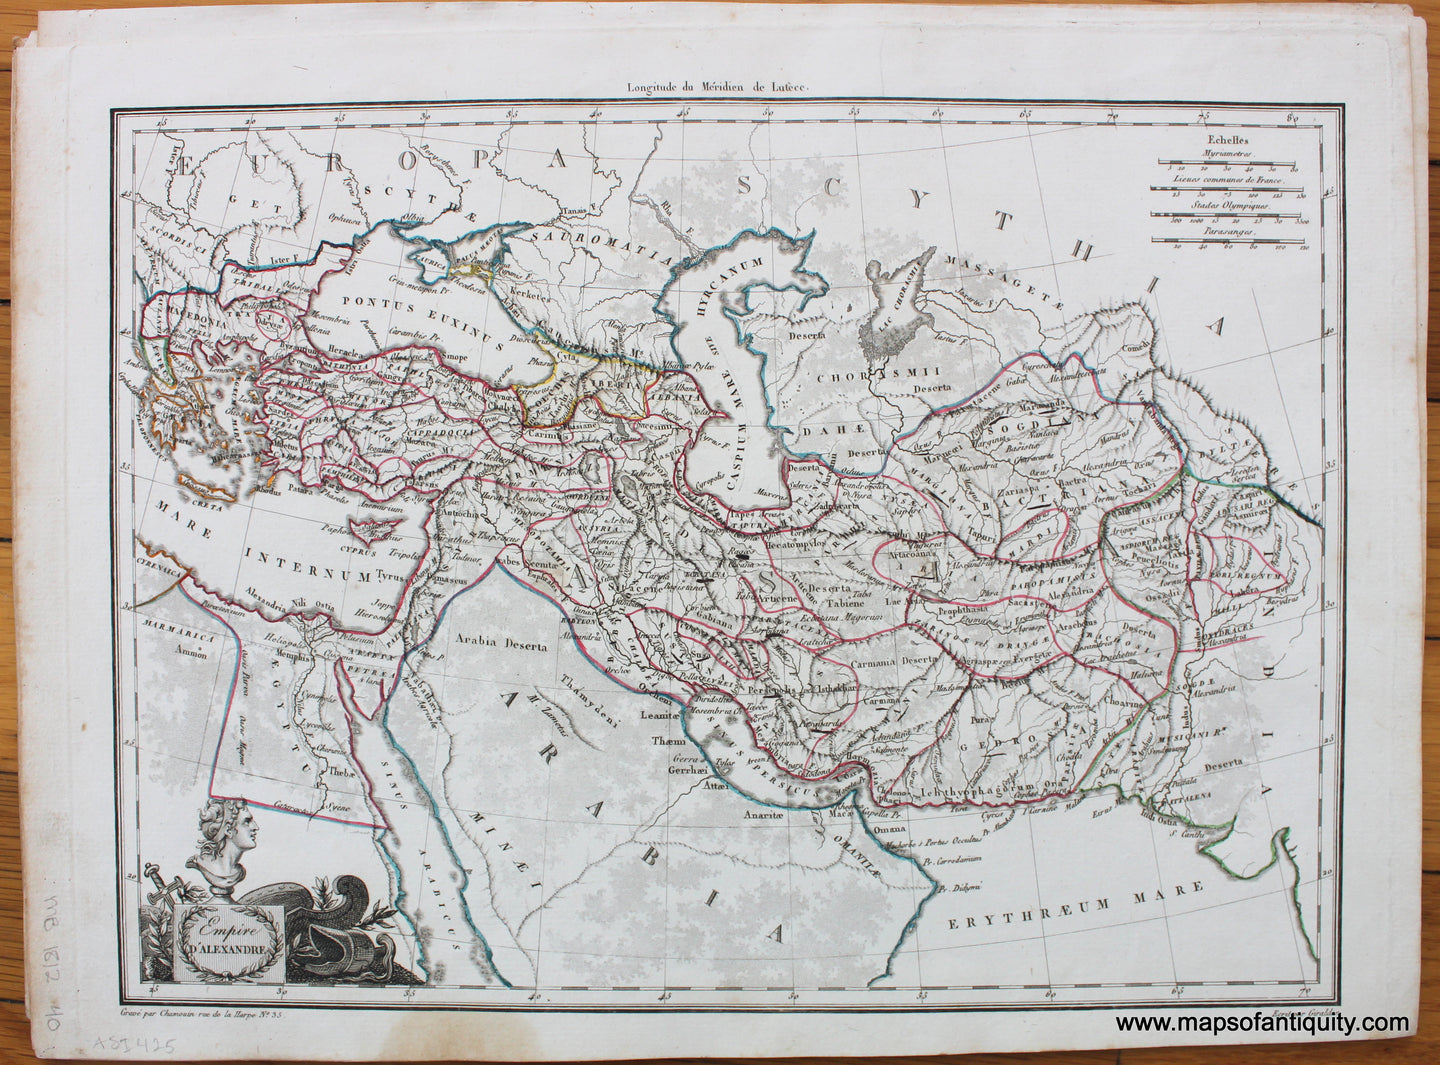 Antique-Hand-Colored-Map-Empire-d'-Alexandre-1812-Malte-Brun-Lapie-1800s-19th-century-Maps-of-Antiquity